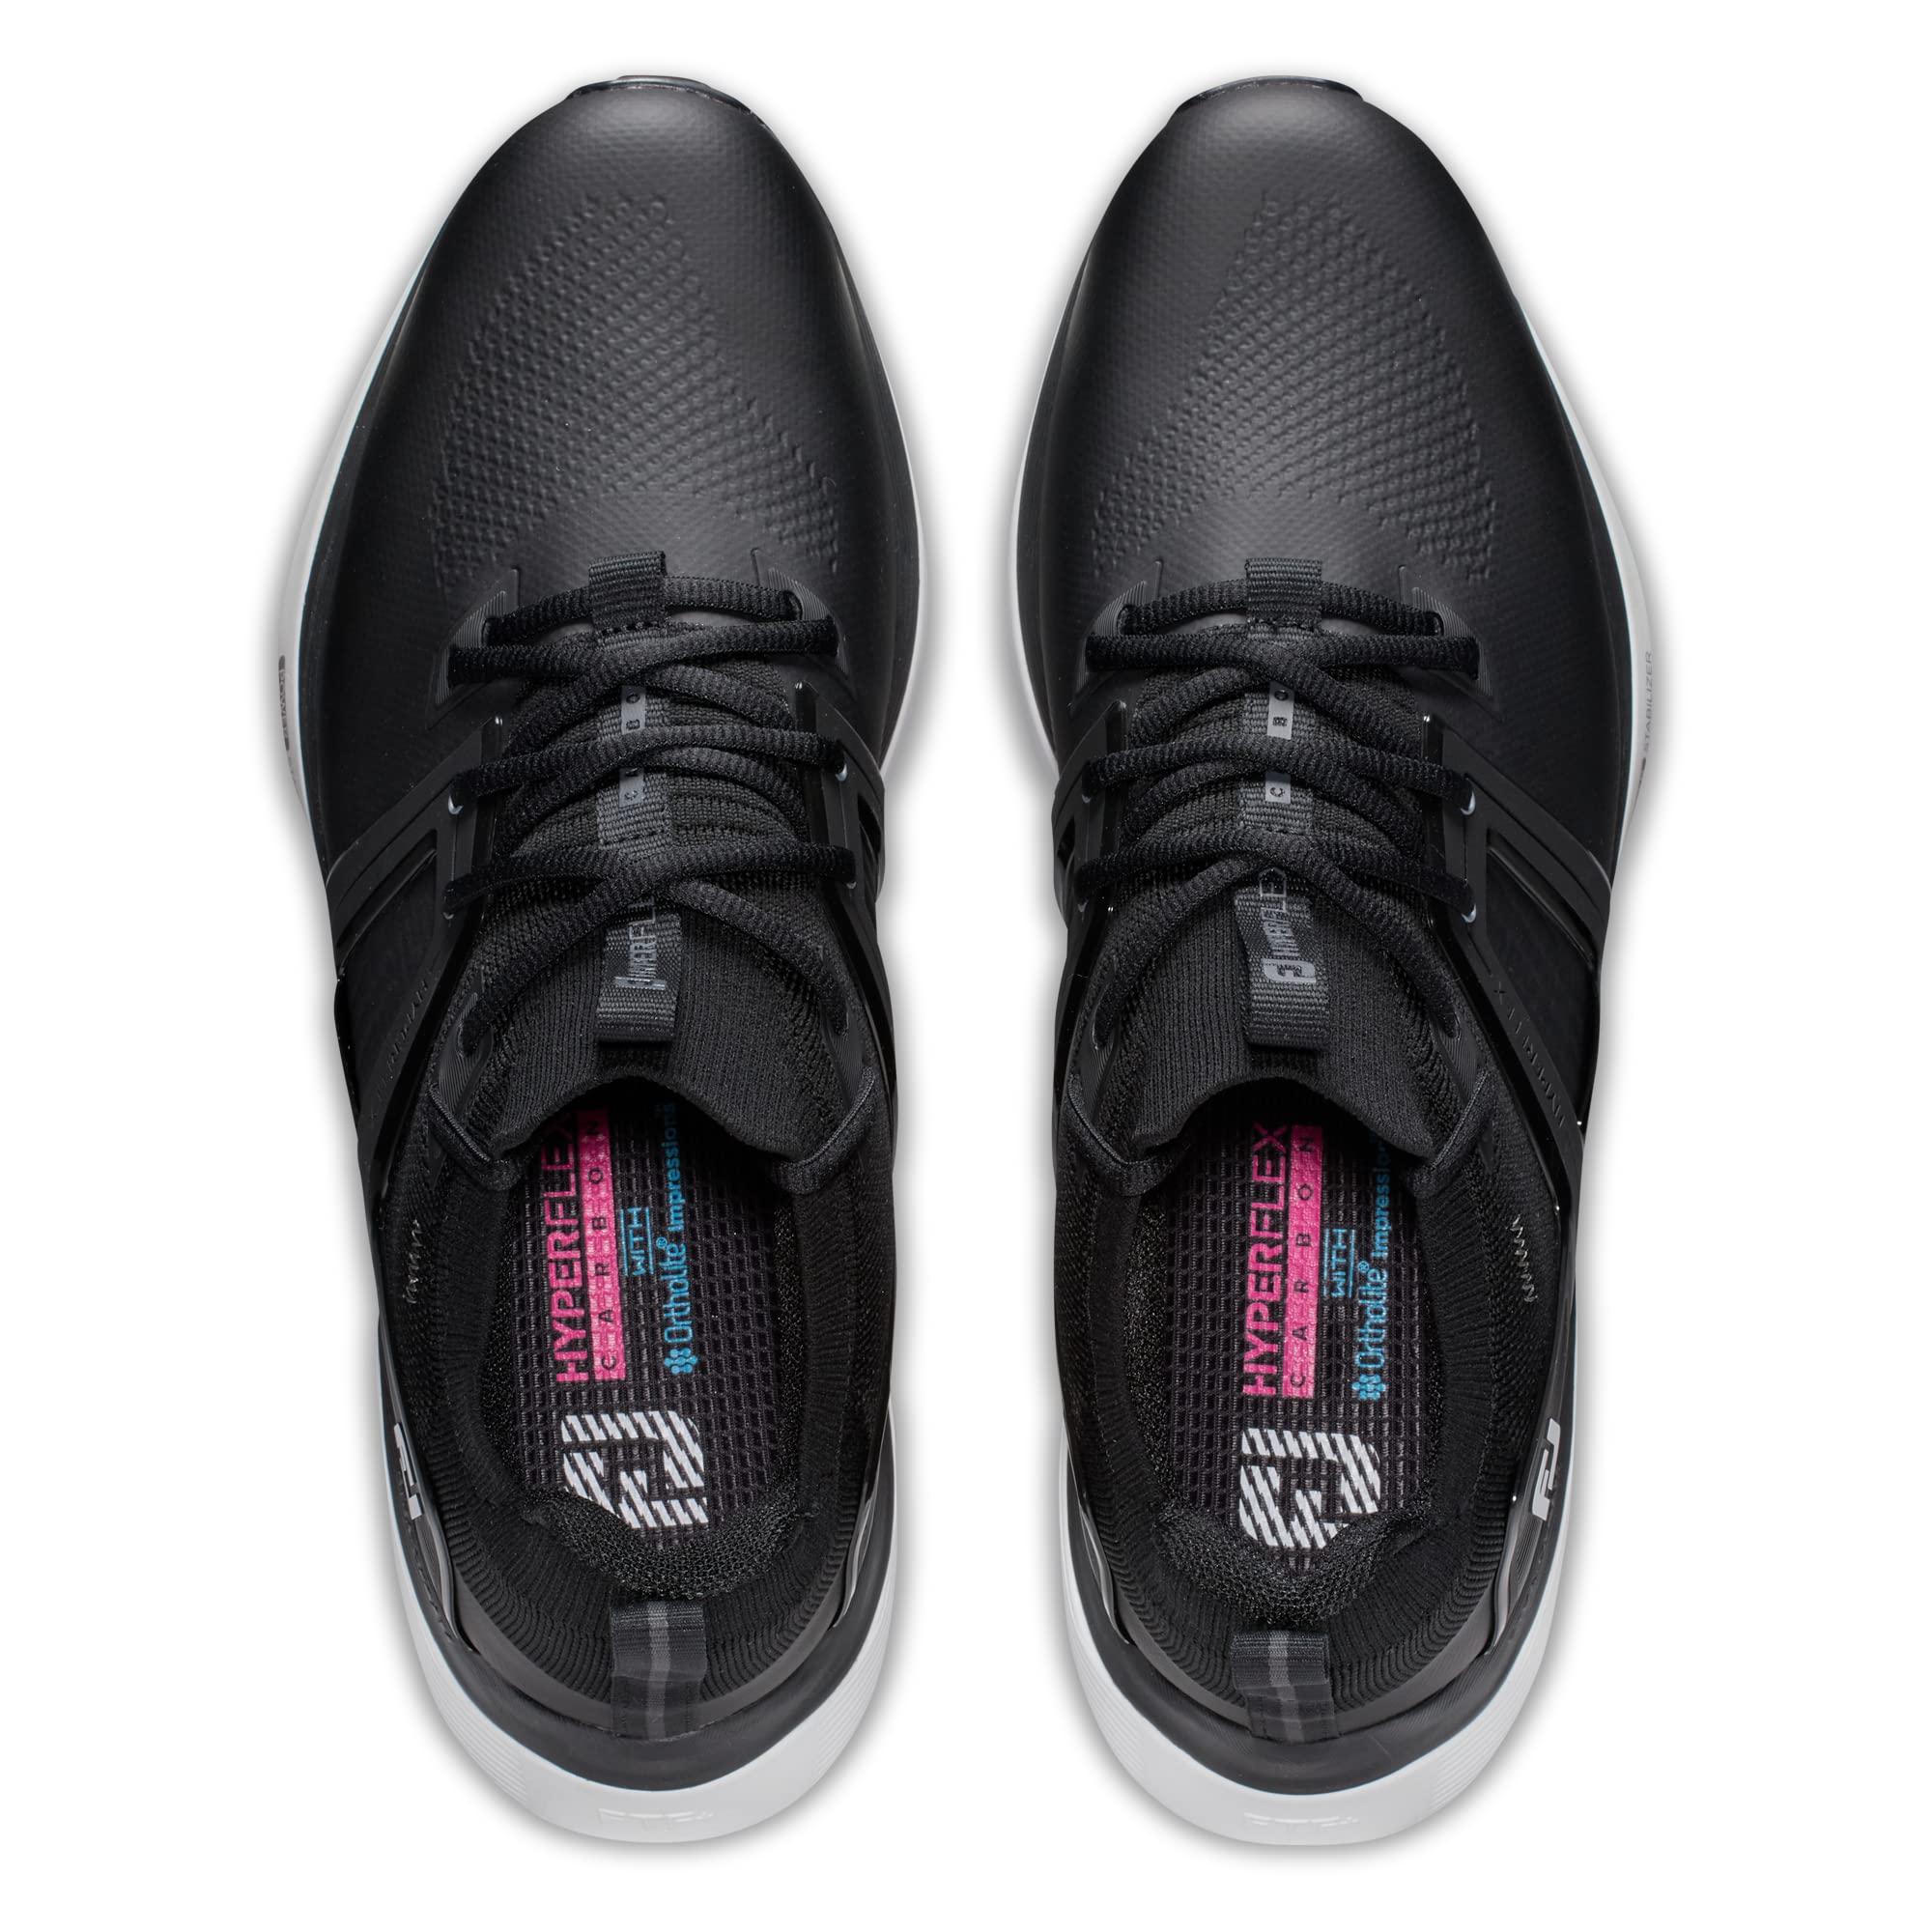 FootJoy Men's Hyperflex Carbon Golf Shoe